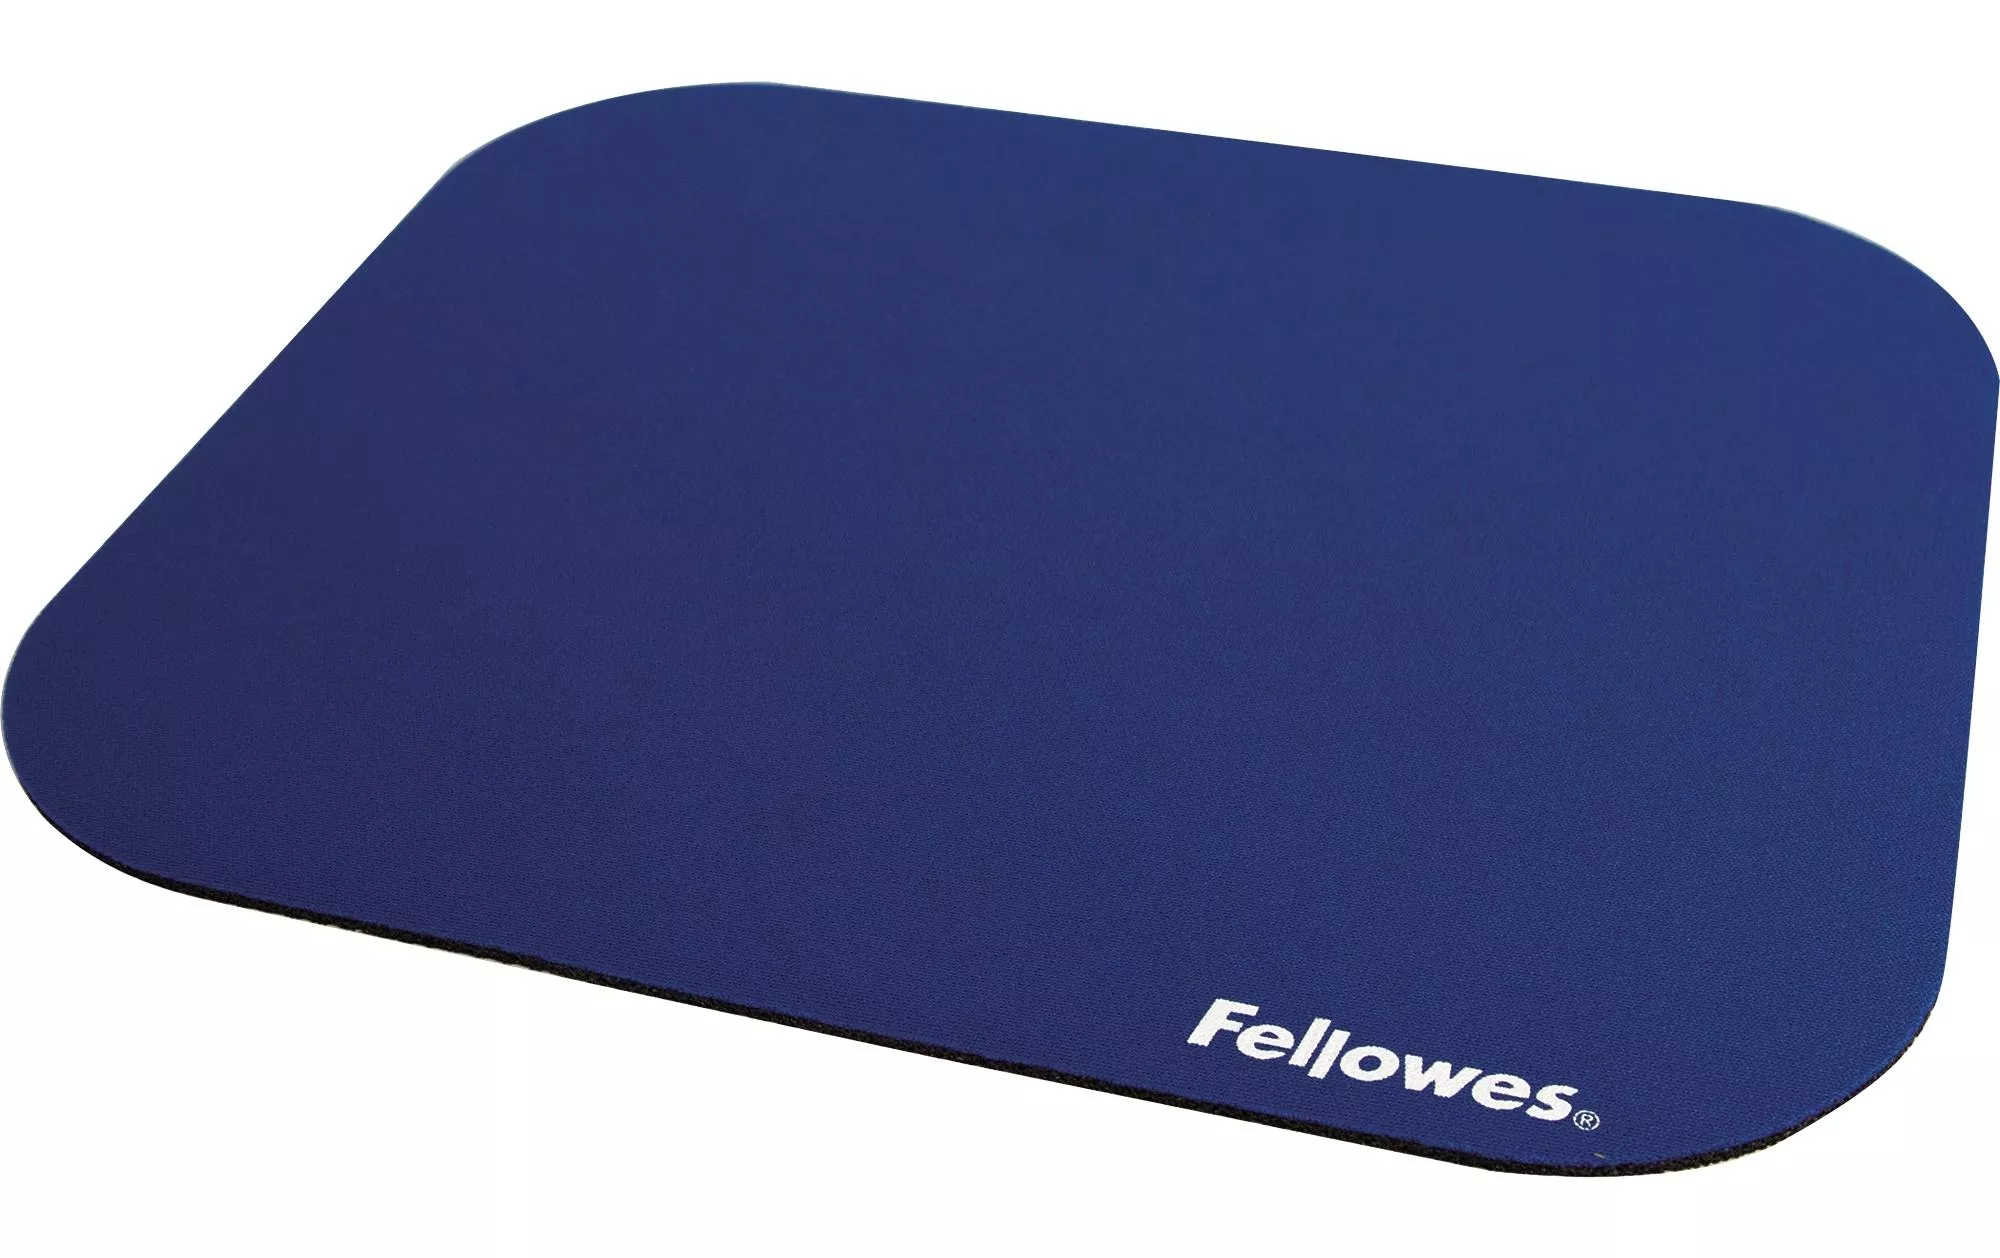 Tappetino per mouse Fellowes Premium Blu